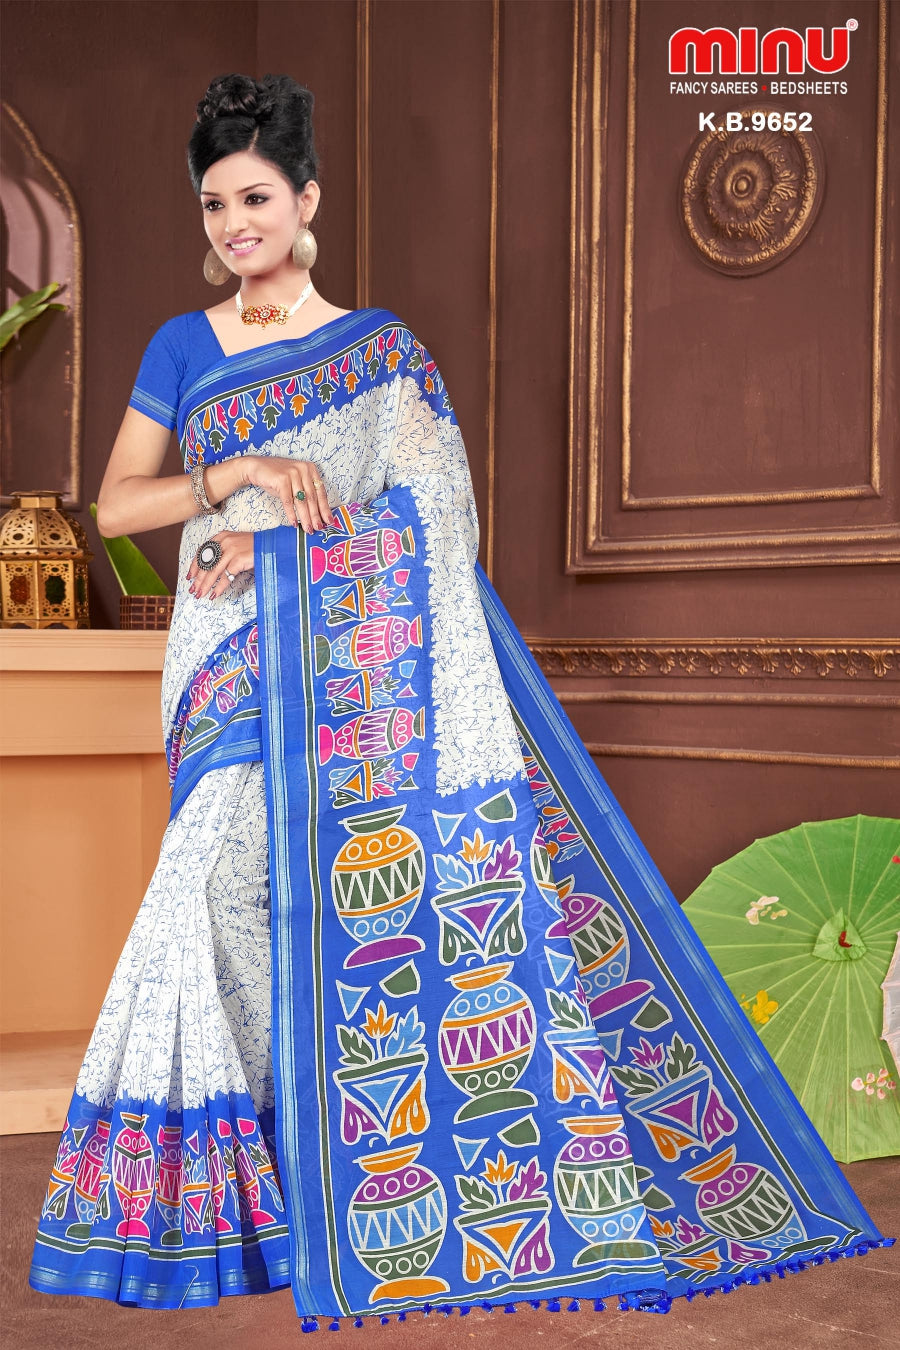 Printed fancy saree wearing woman standing